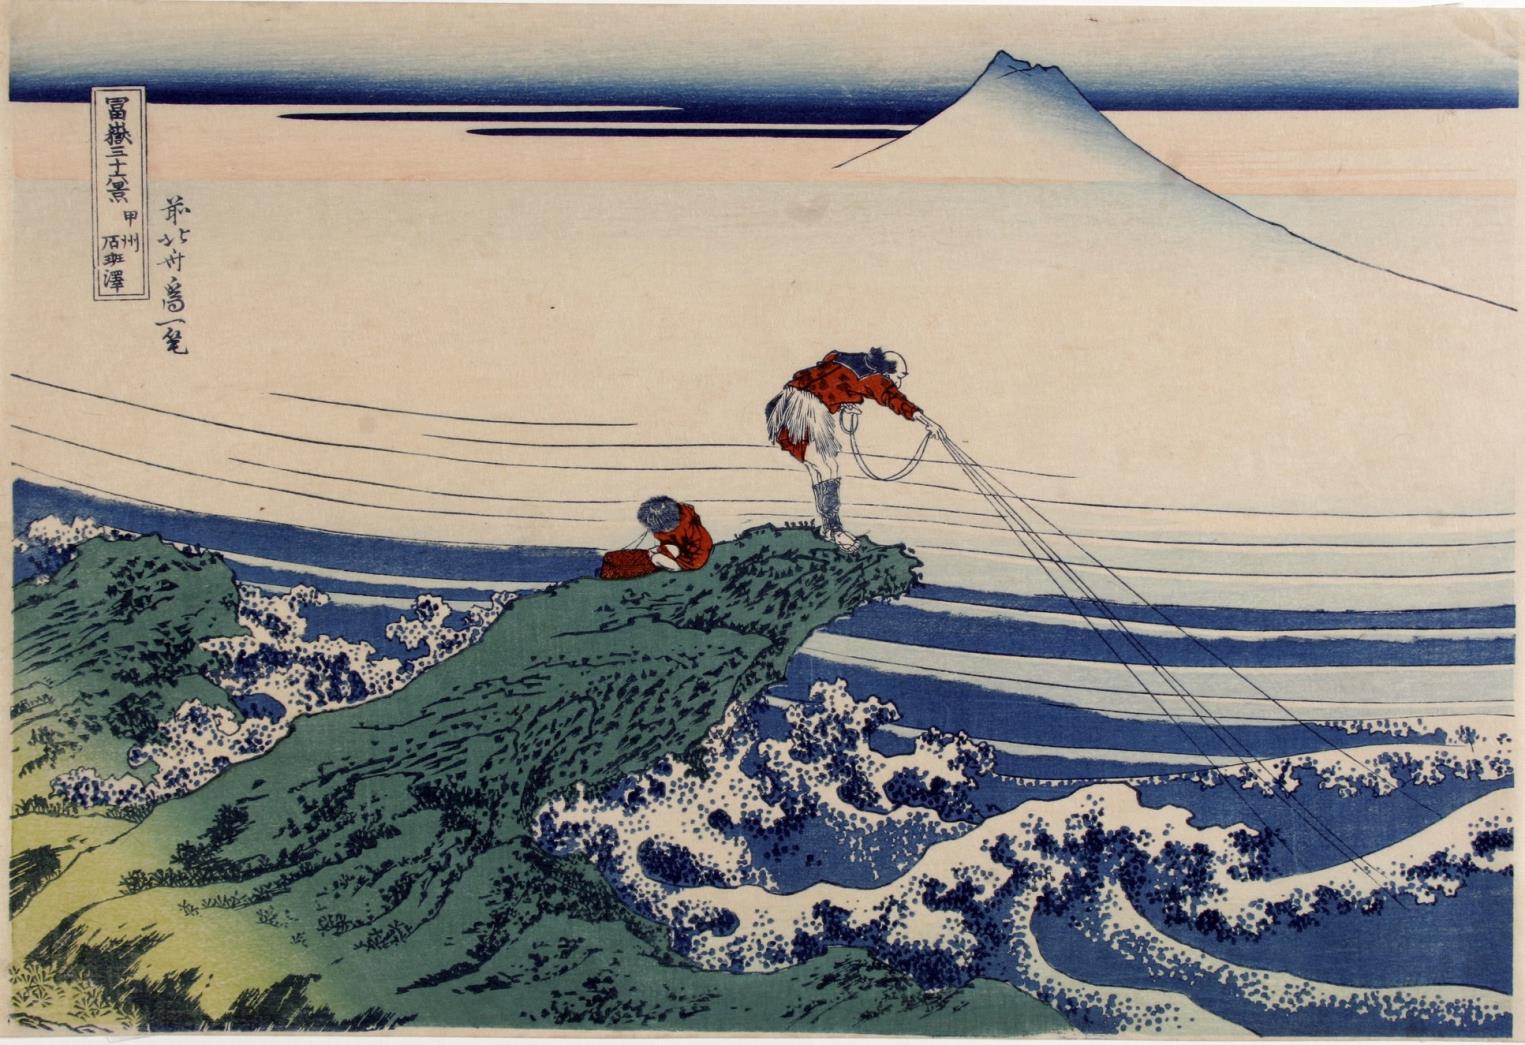 Katsushika Hokusai (1760-1849), Kajikazawa in the province of Kai (1829-1833). Collection of Japanese prints of Centre Céramique, Maastricht, the Netherlands